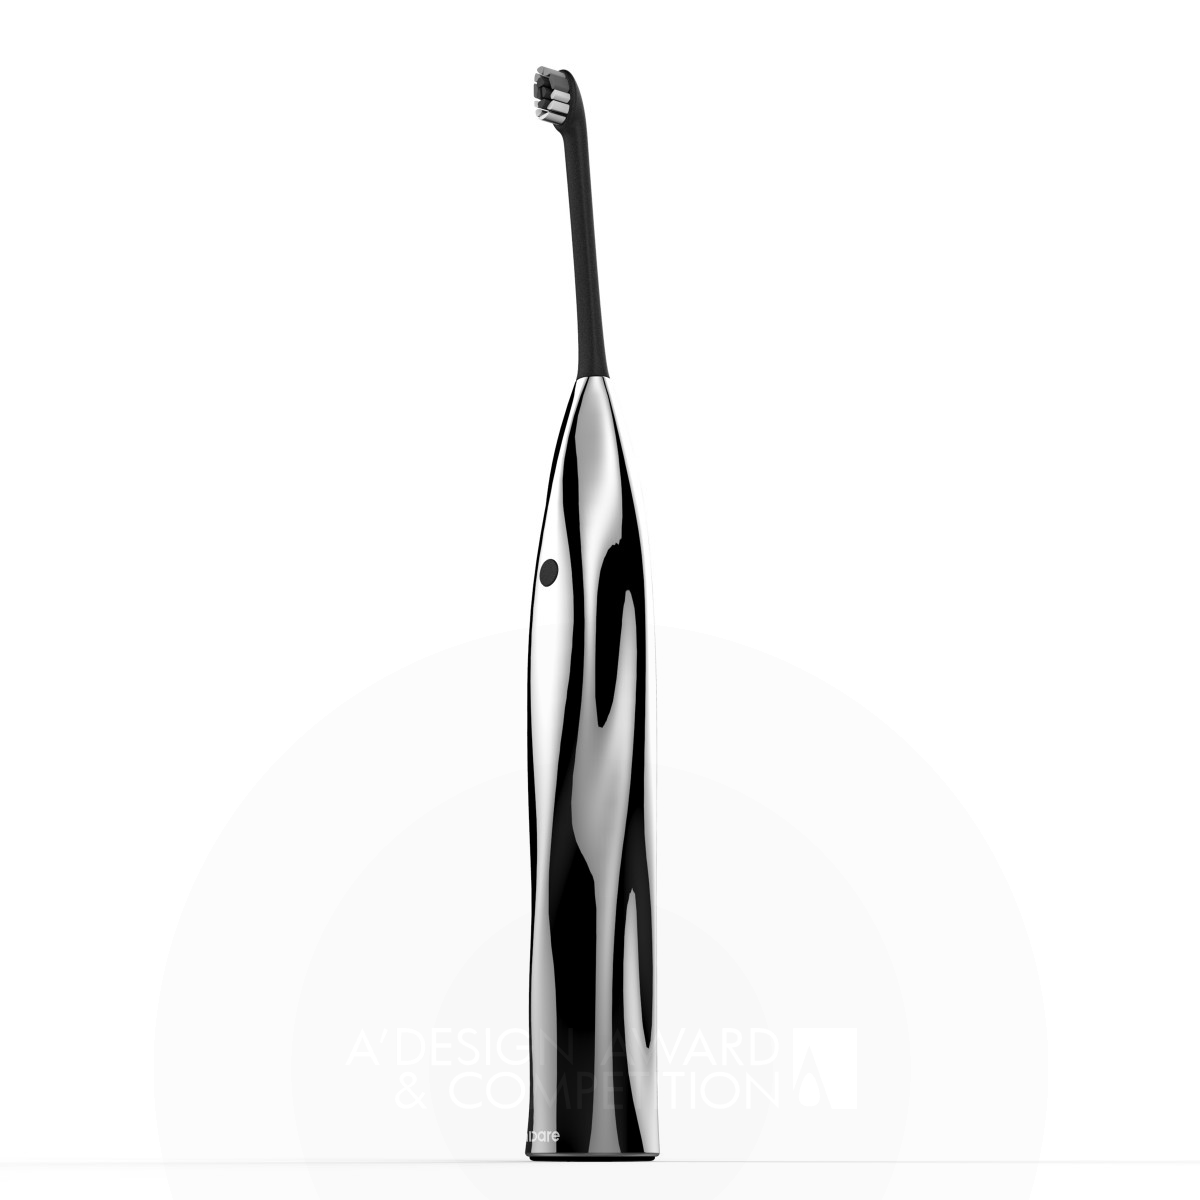 inDare Design Eletronic toothbrush